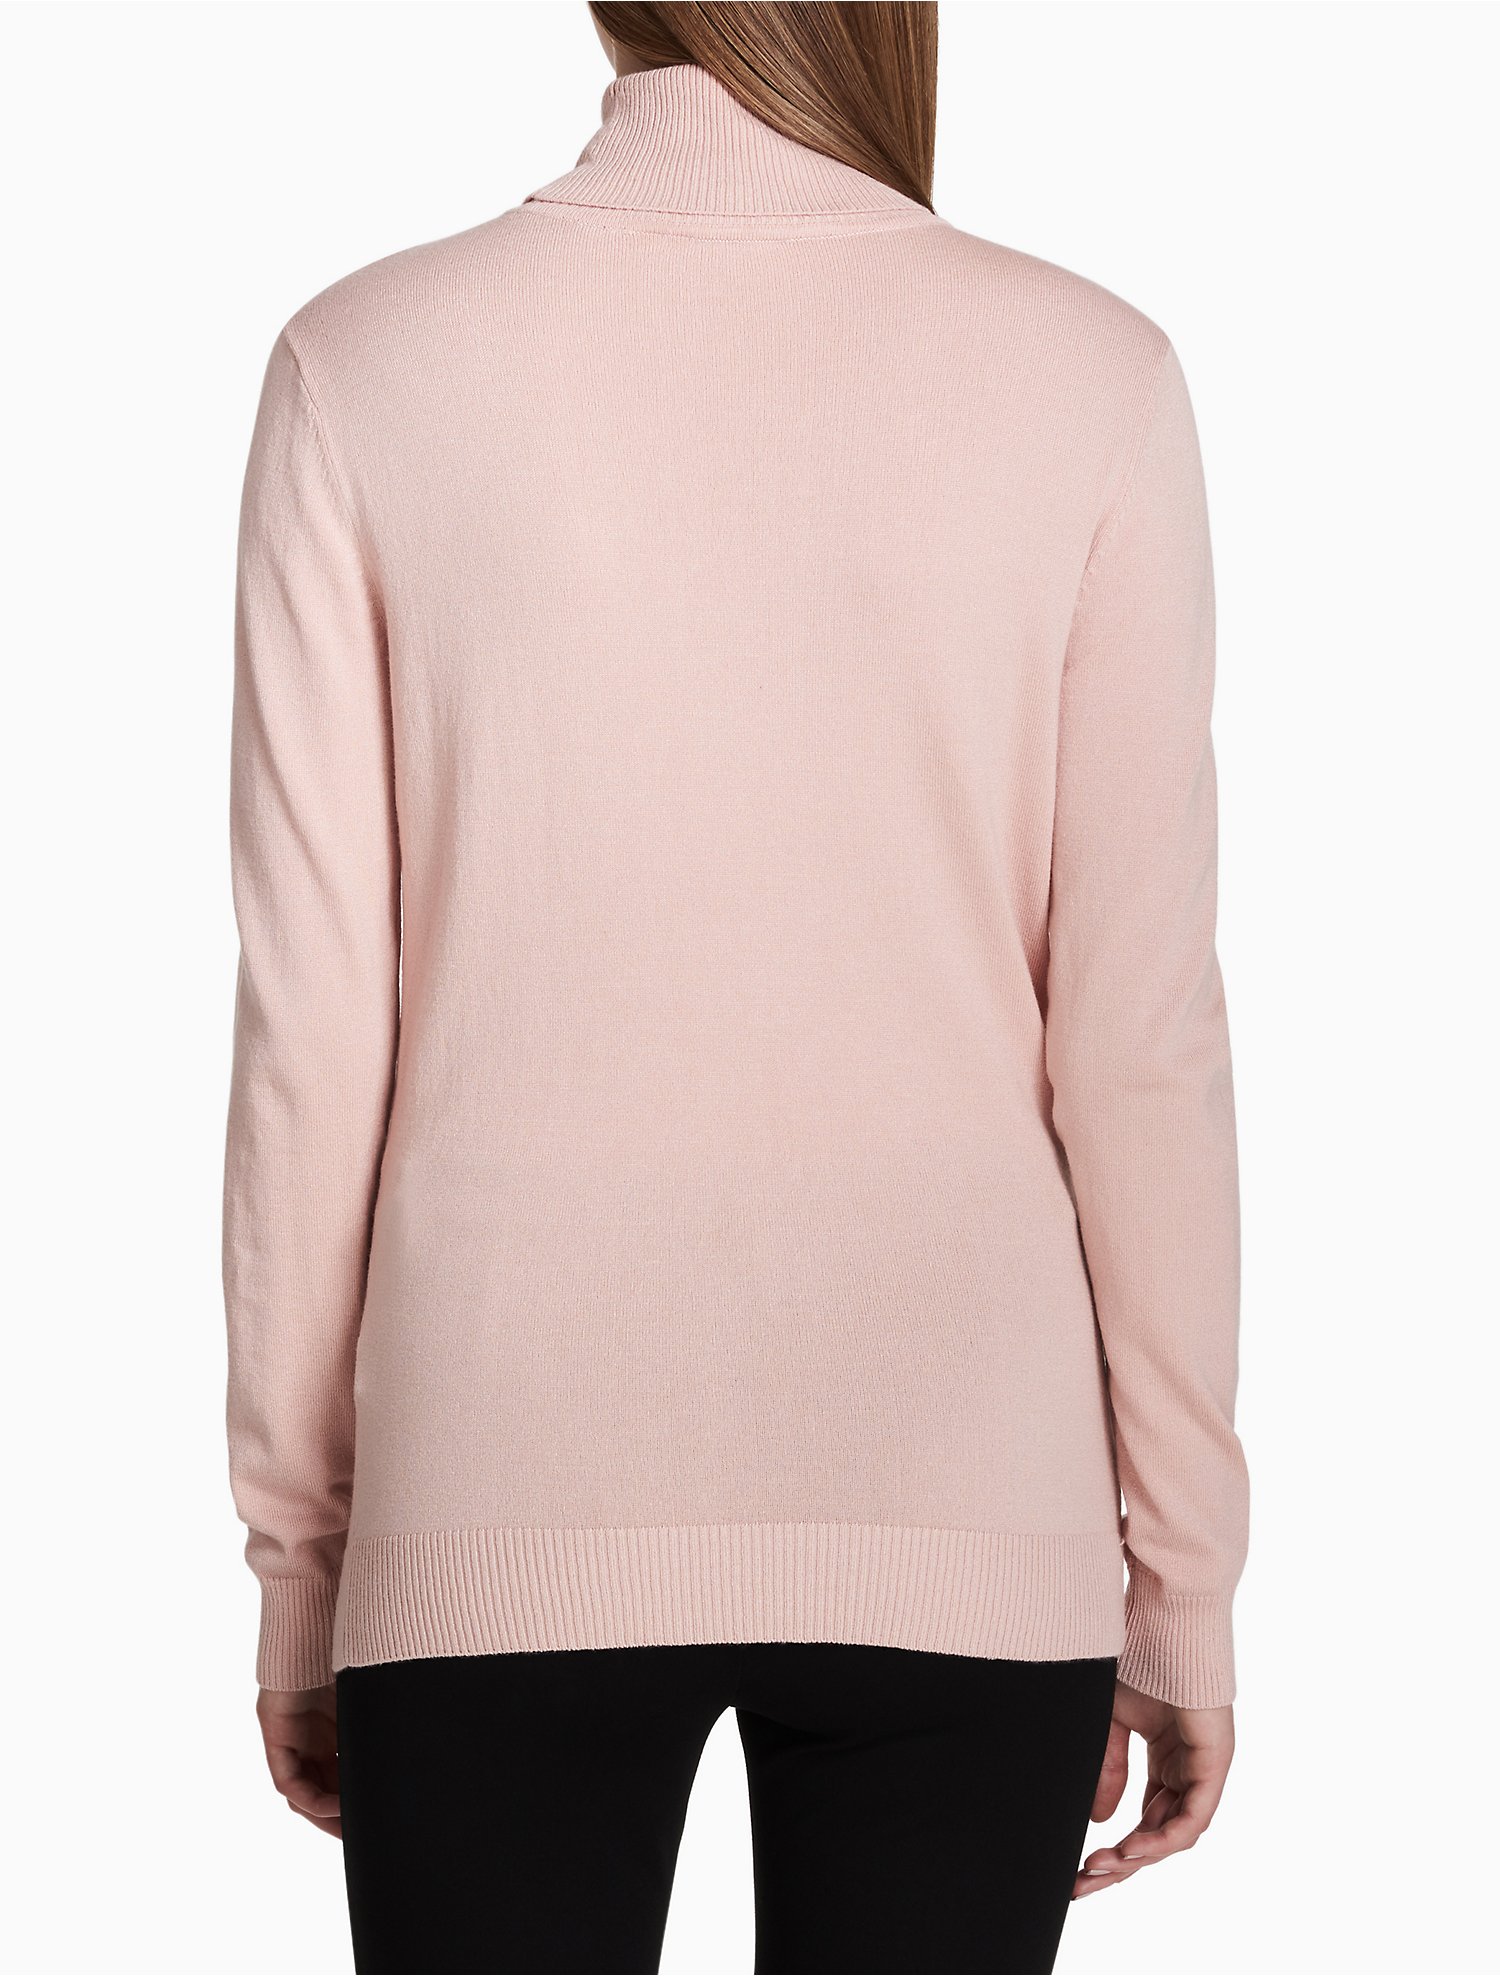 Pink 8Y KIDS FASHION Jumpers & Sweatshirts Elegant Sagos jumper discount 85% 